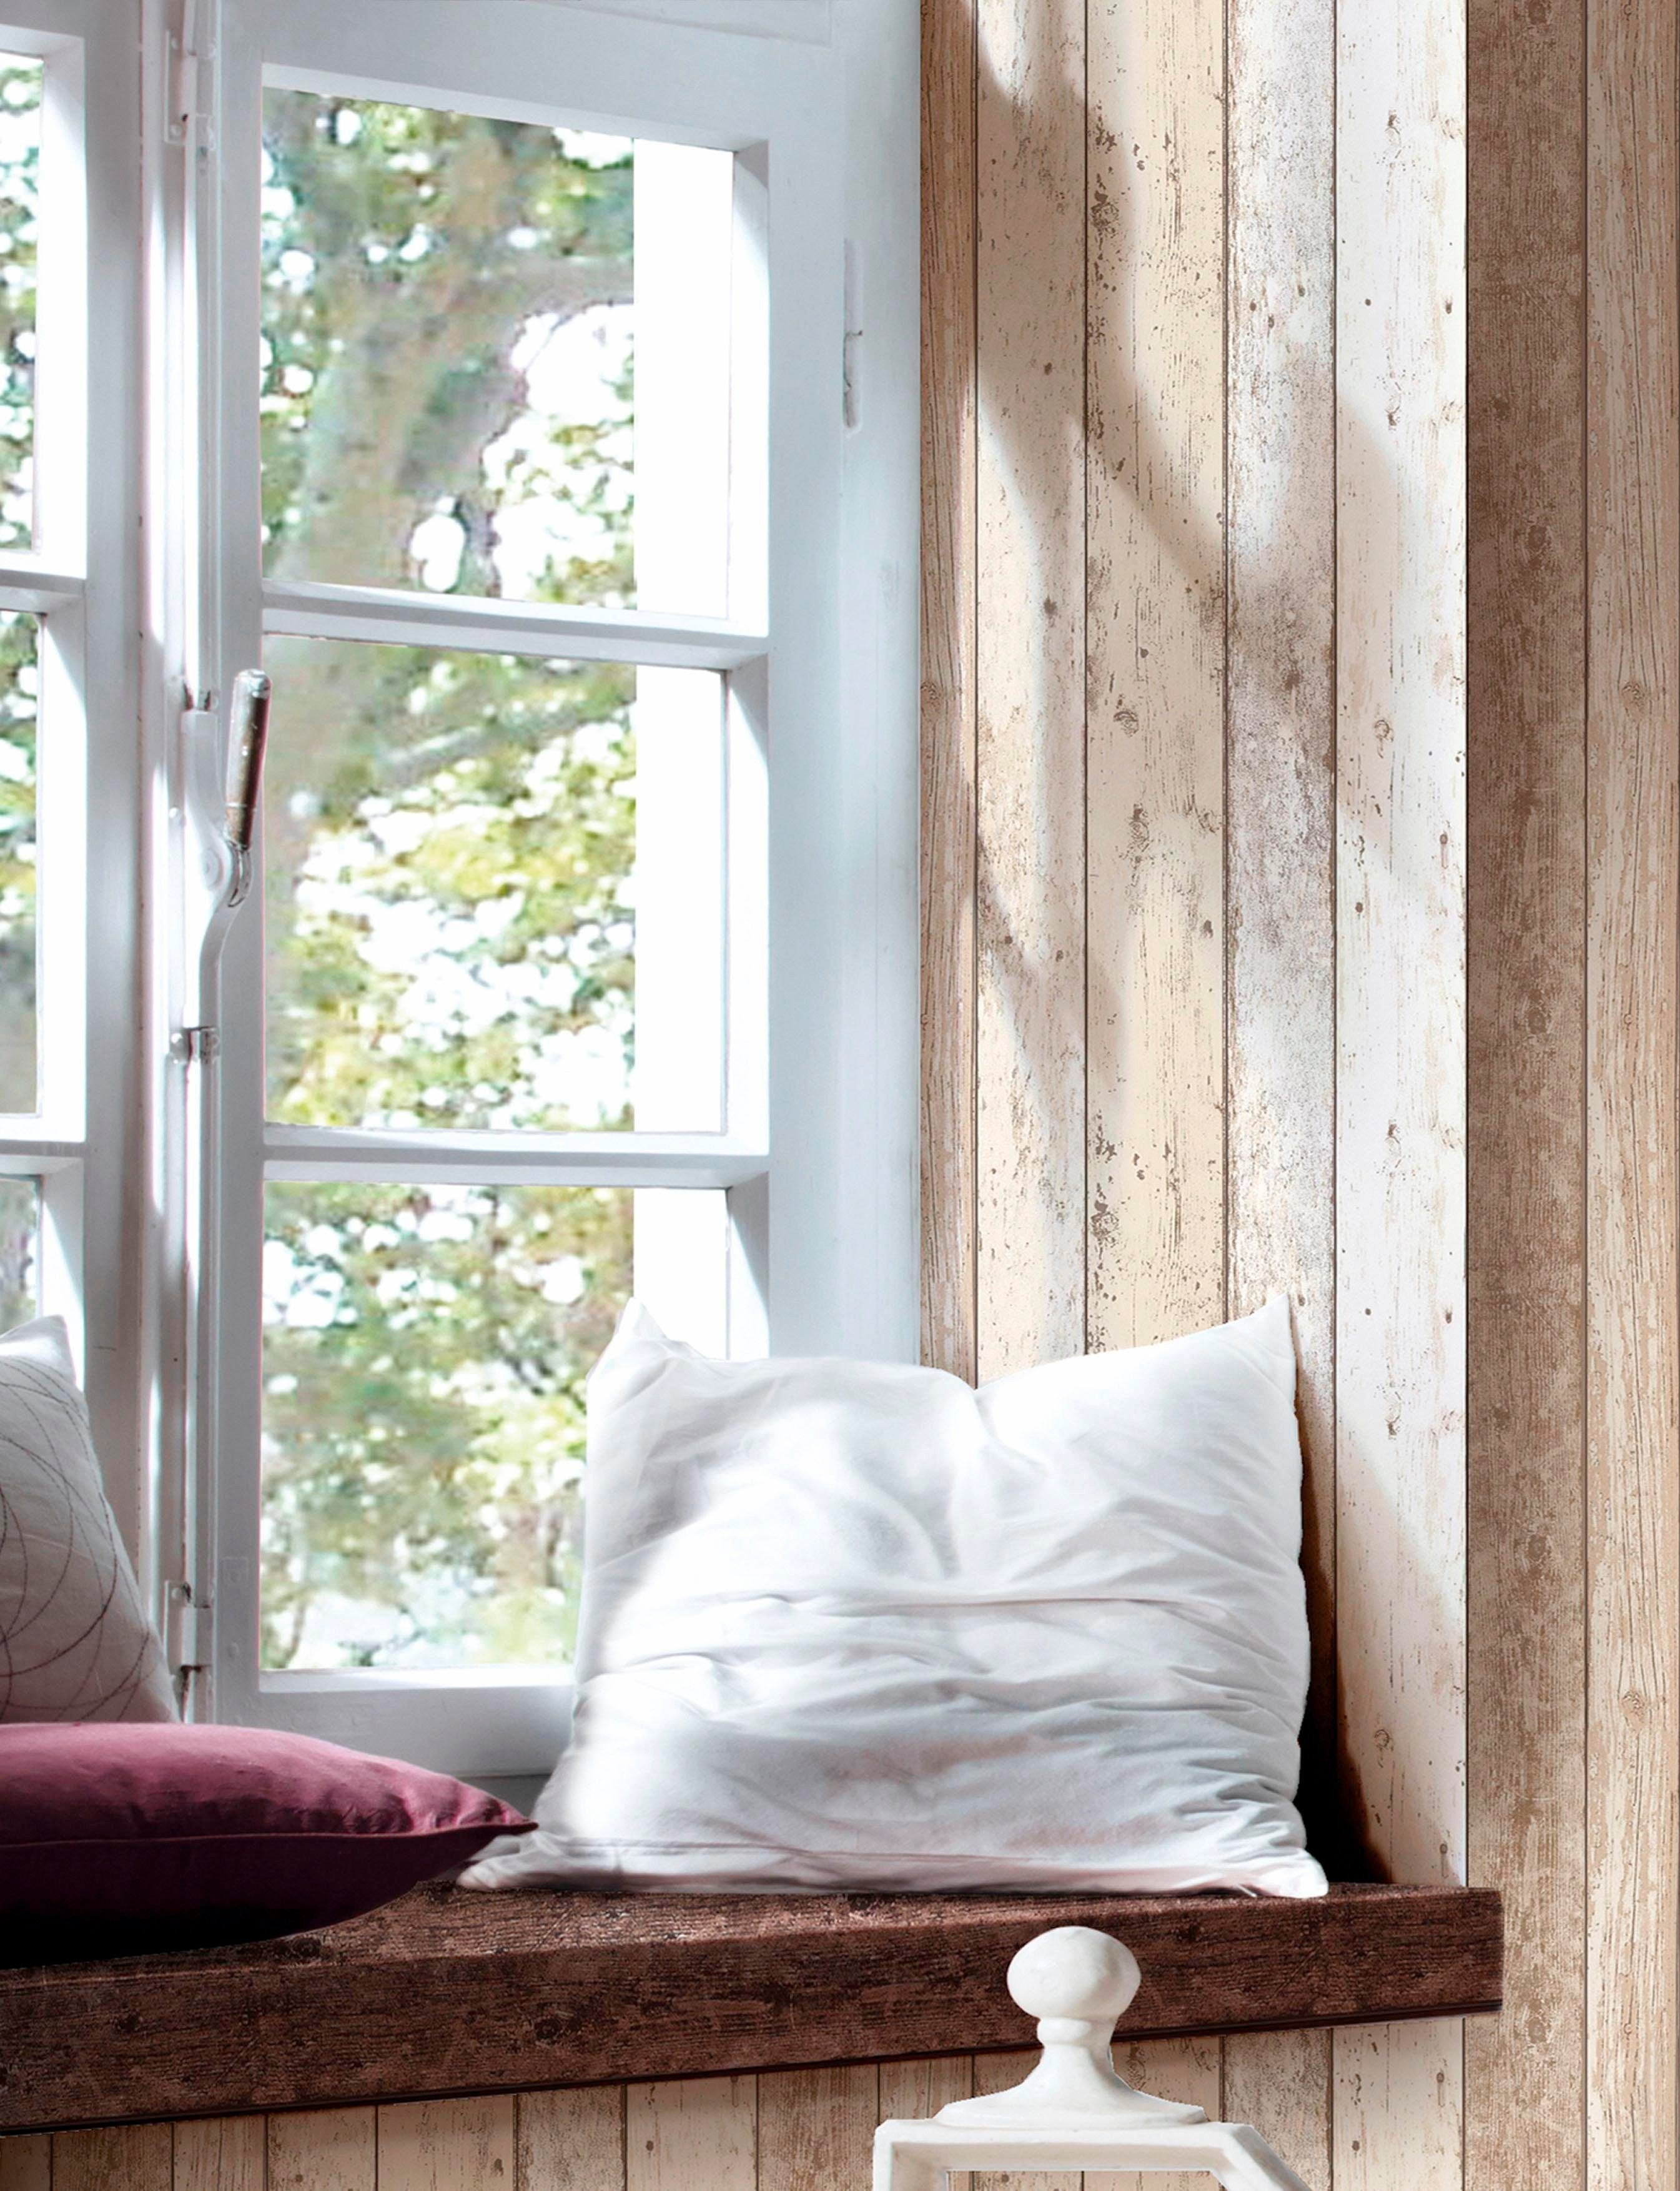 Holz, Stone natur/beige/braun/blau Tapete Streifen living Holzoptik of walls Wood`n Edition, 2nd Best Vliestapete